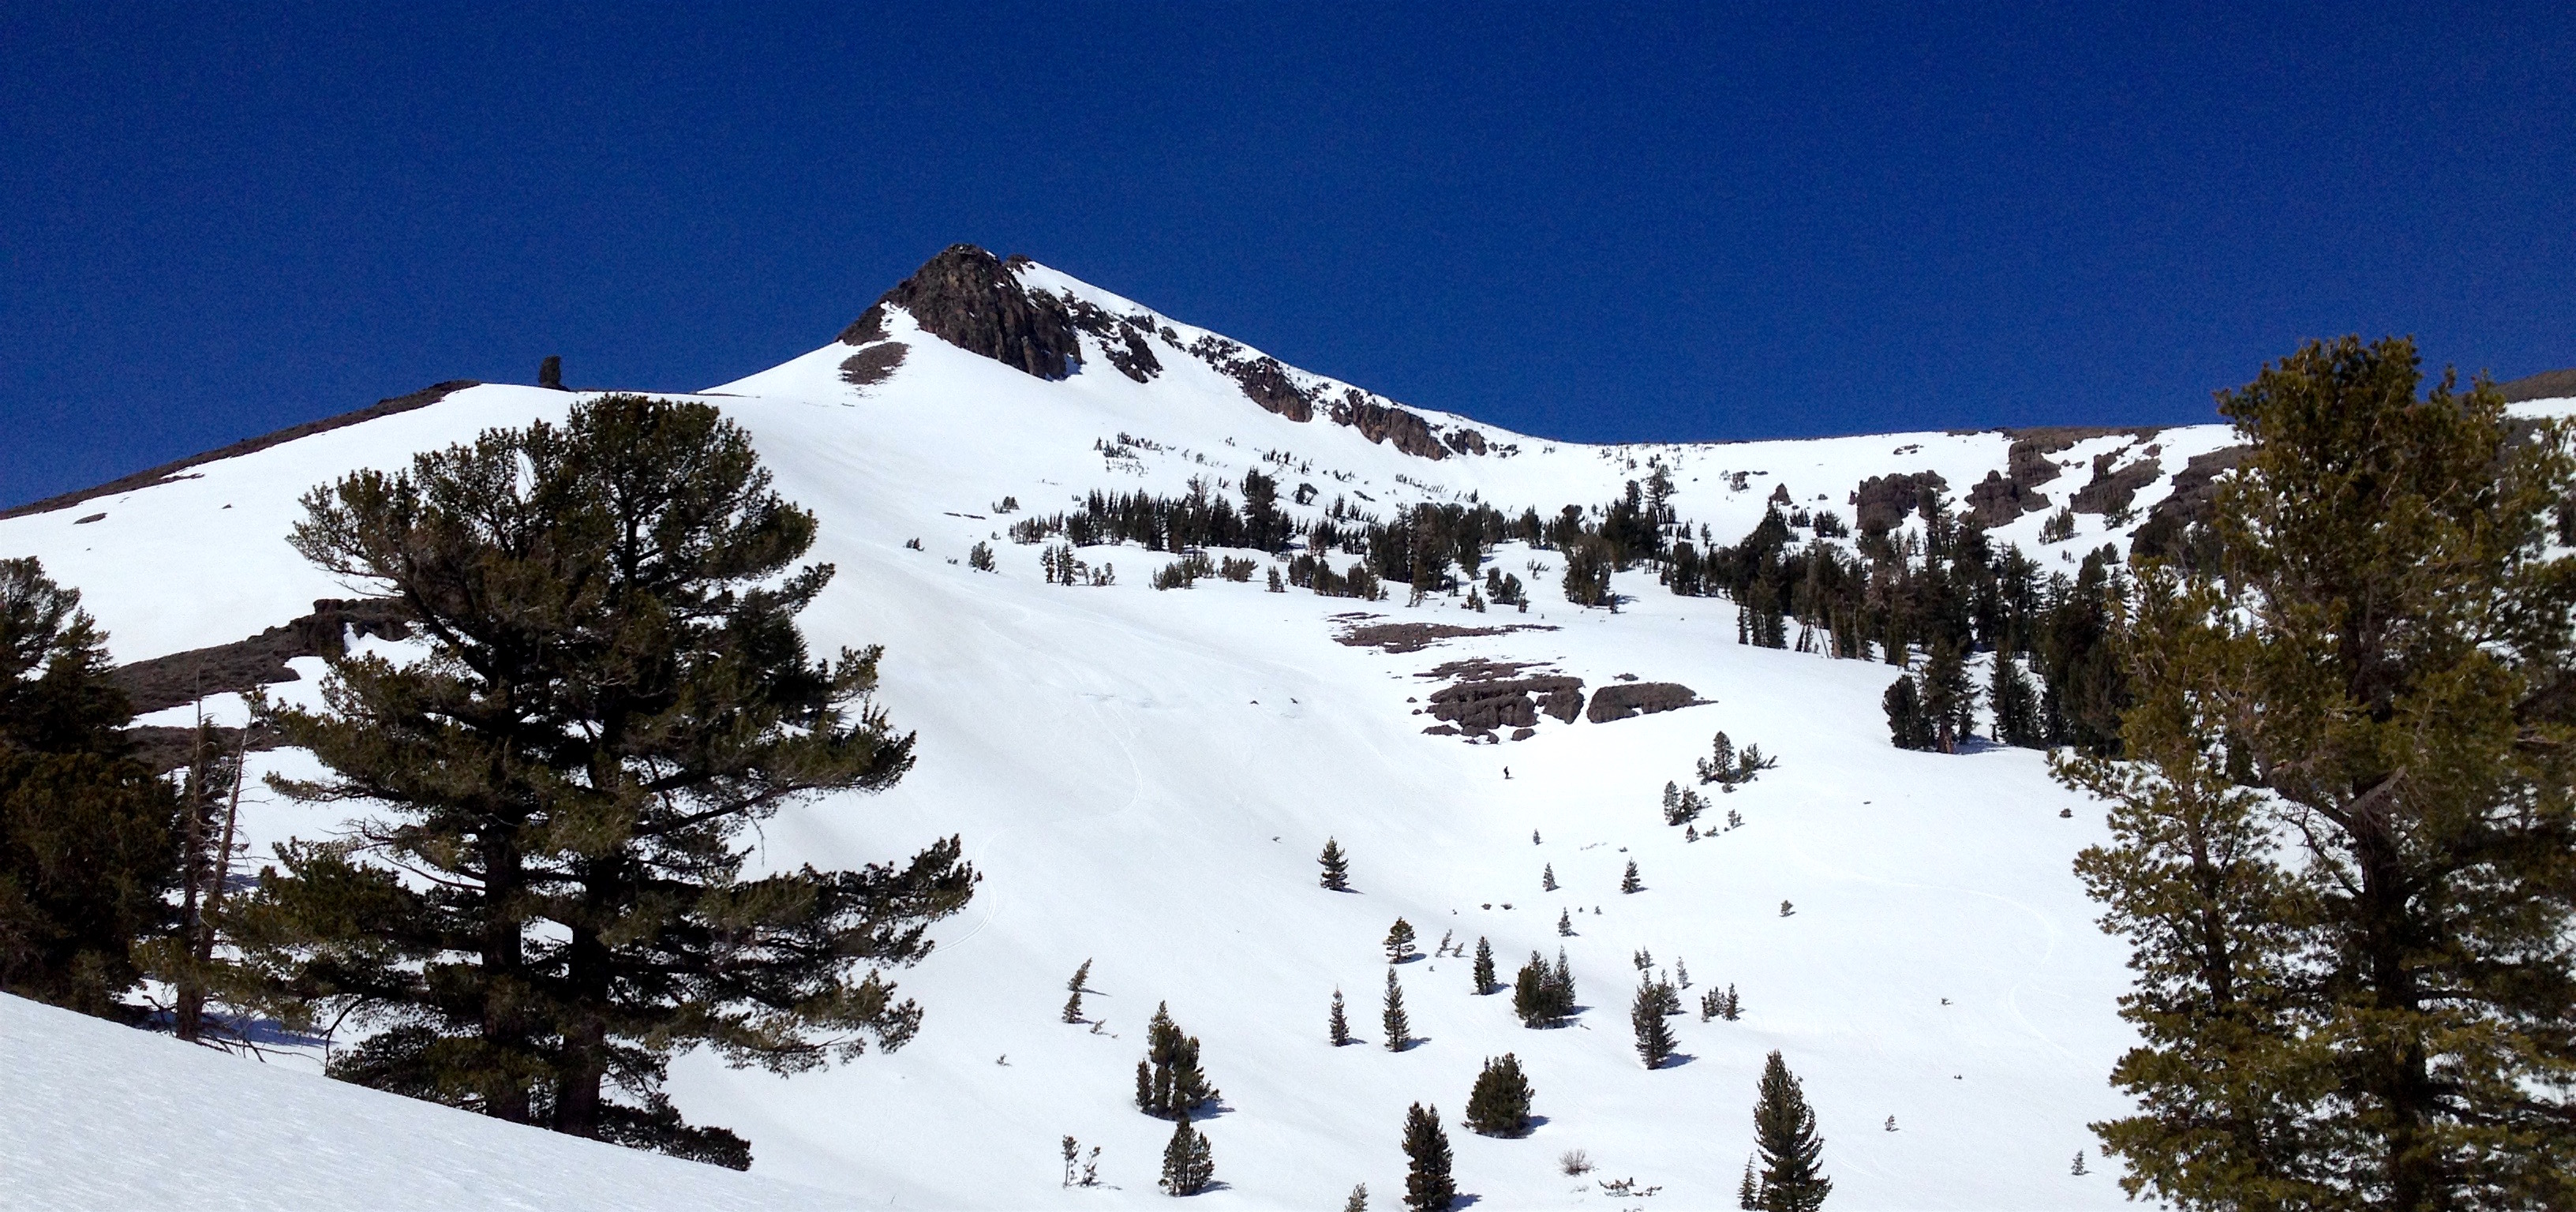 Stevens Peak today. photo: miles clark/snowbrains